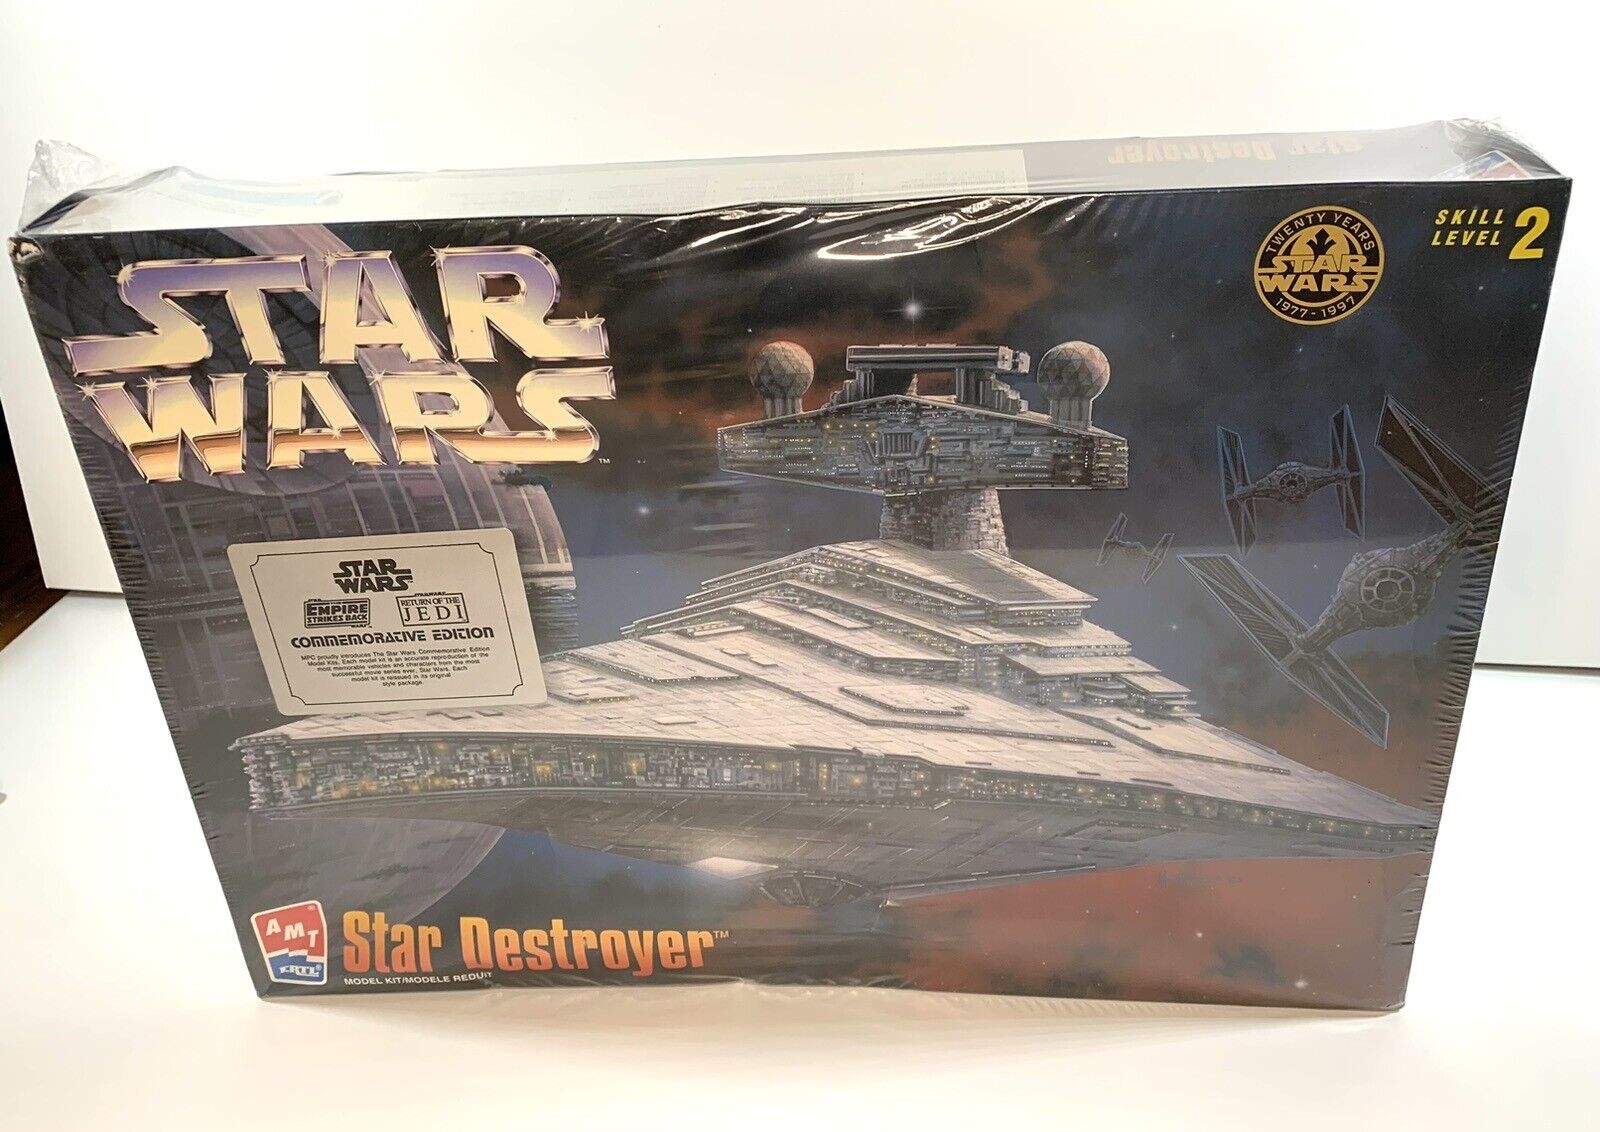 Star Wars Imperial Star Destroyer - Commemorative Edition - AMT Model Kit 1:5000